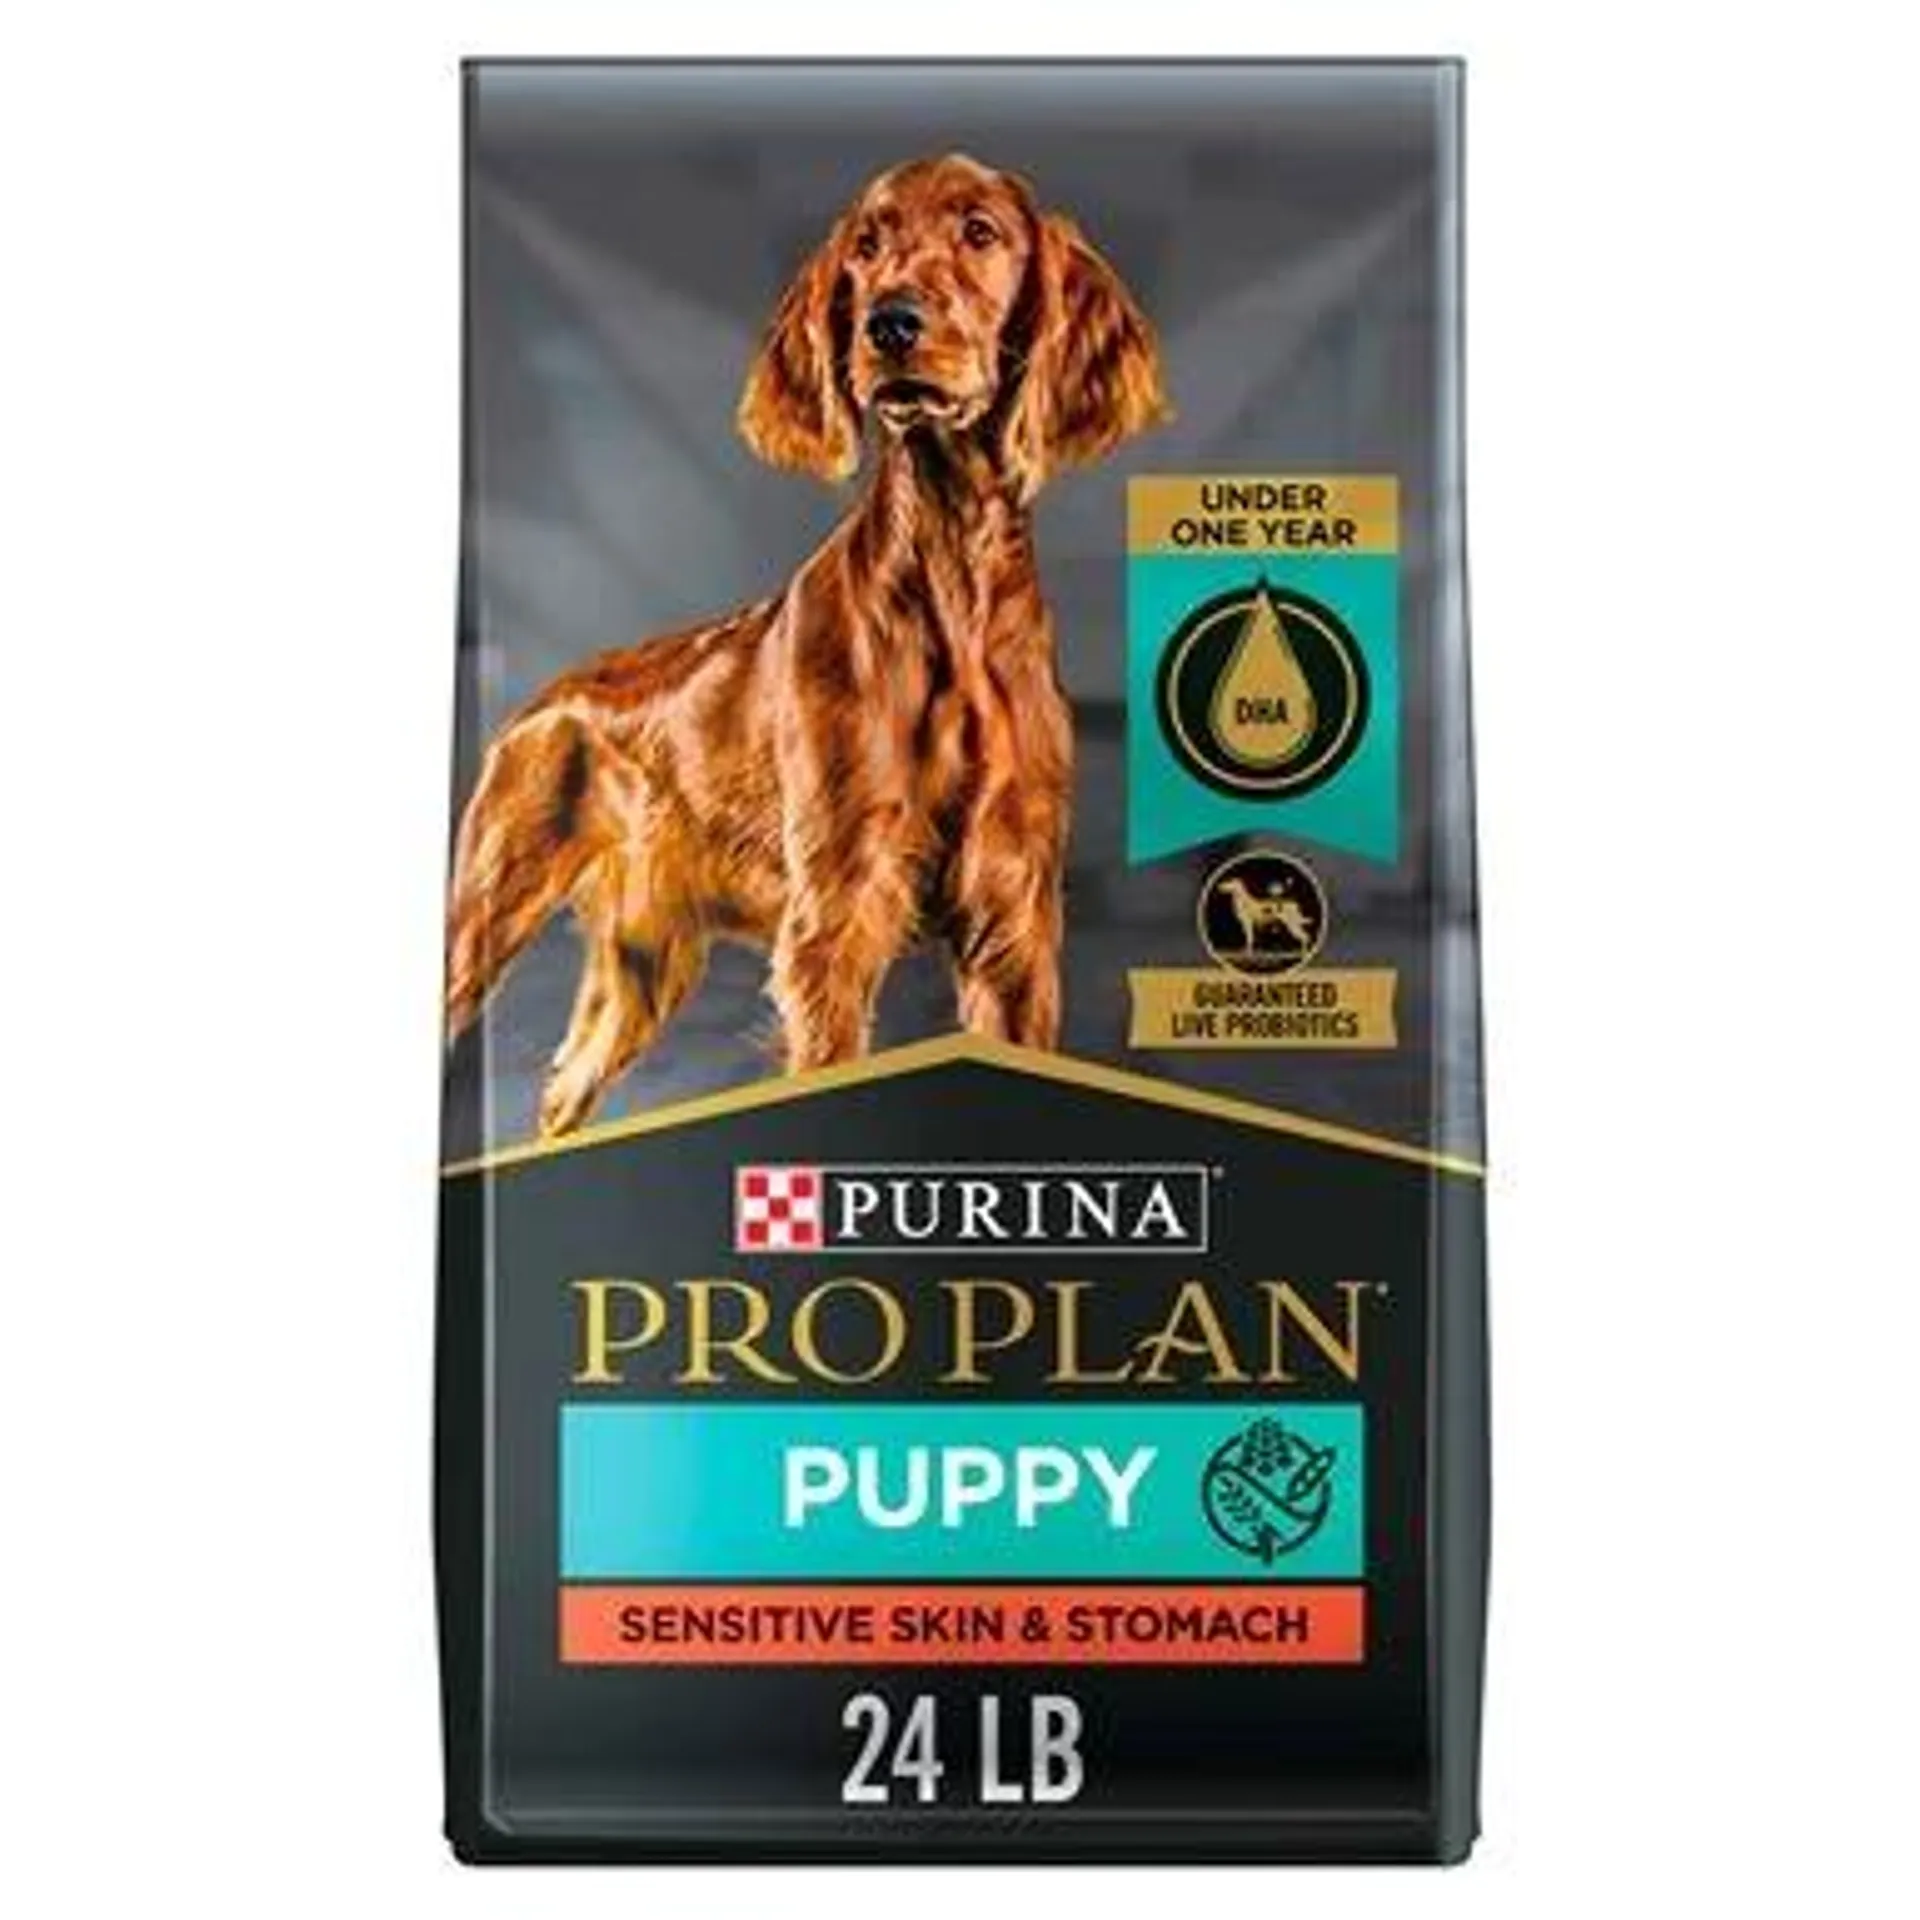 Purina Pro Plan Sensitive Skin and Stomach Puppy Food With Probiotics, Salmon & Rice Formula - 24 Pound Bag